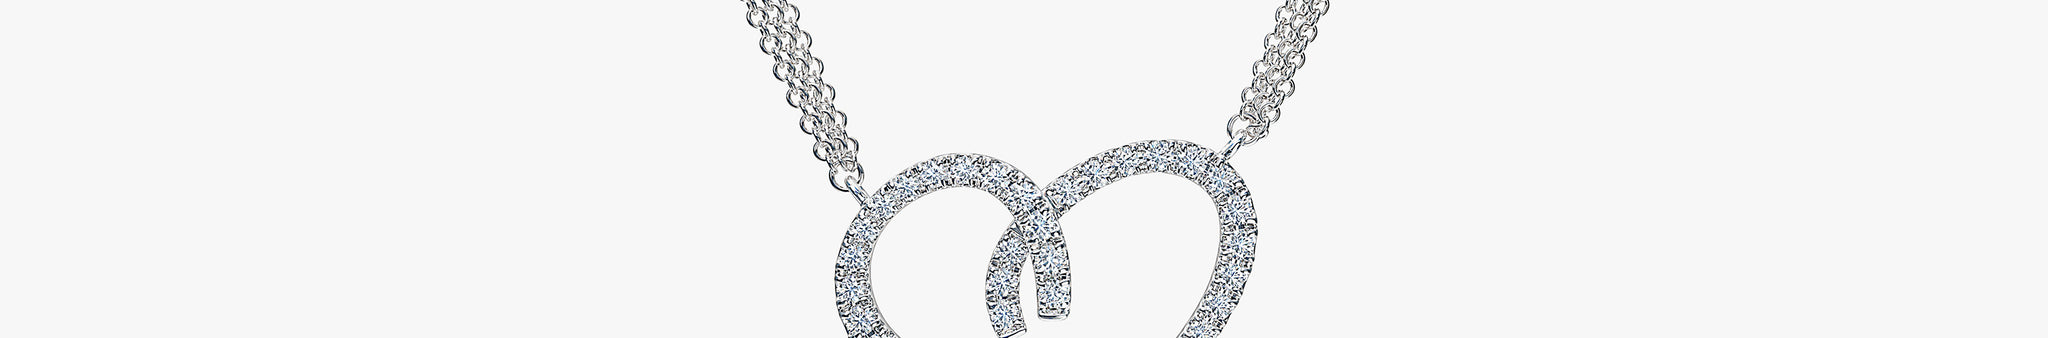 J'EVAR 14KT White Gold Heart Key ALTR Lab Grown Diamond Necklace Front View